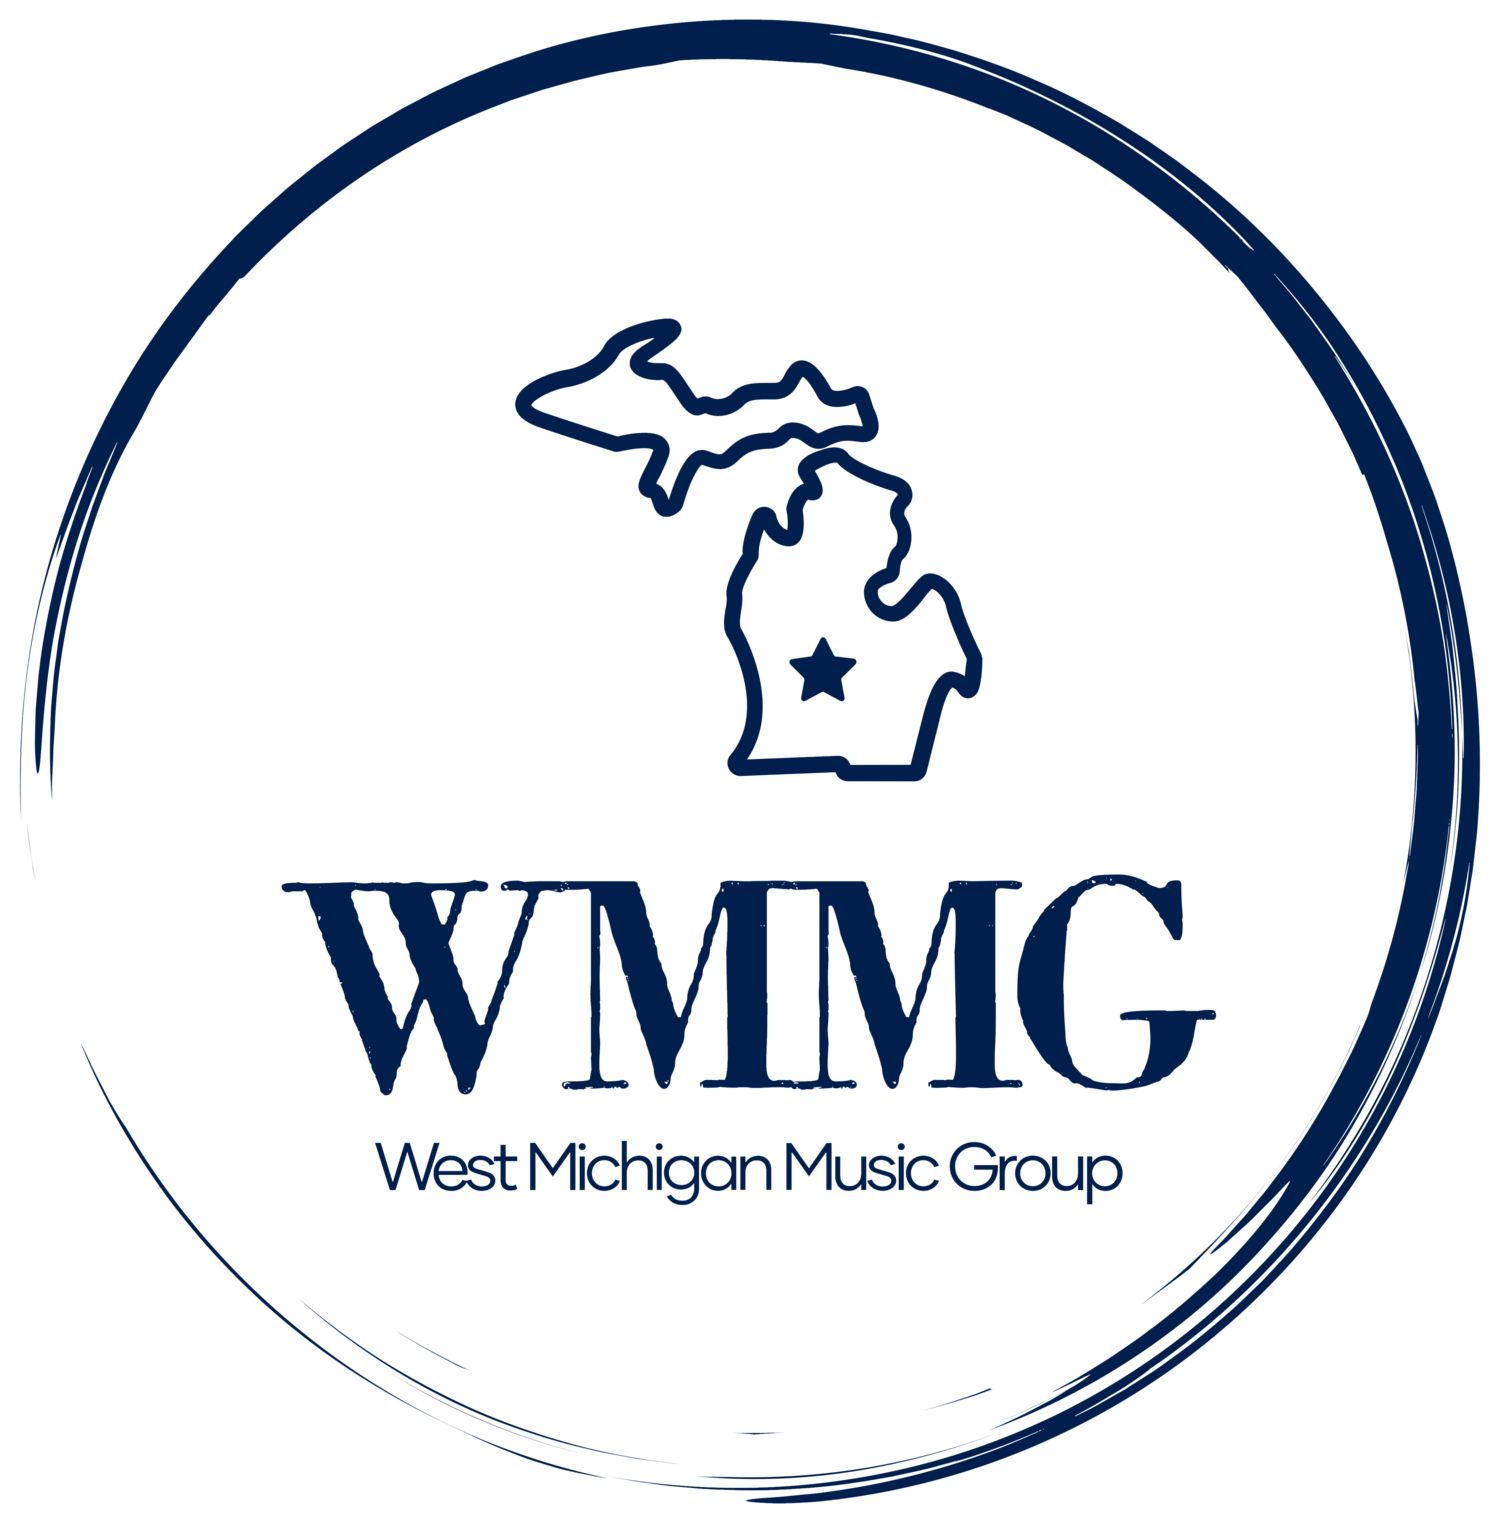 West Michigan Music Group